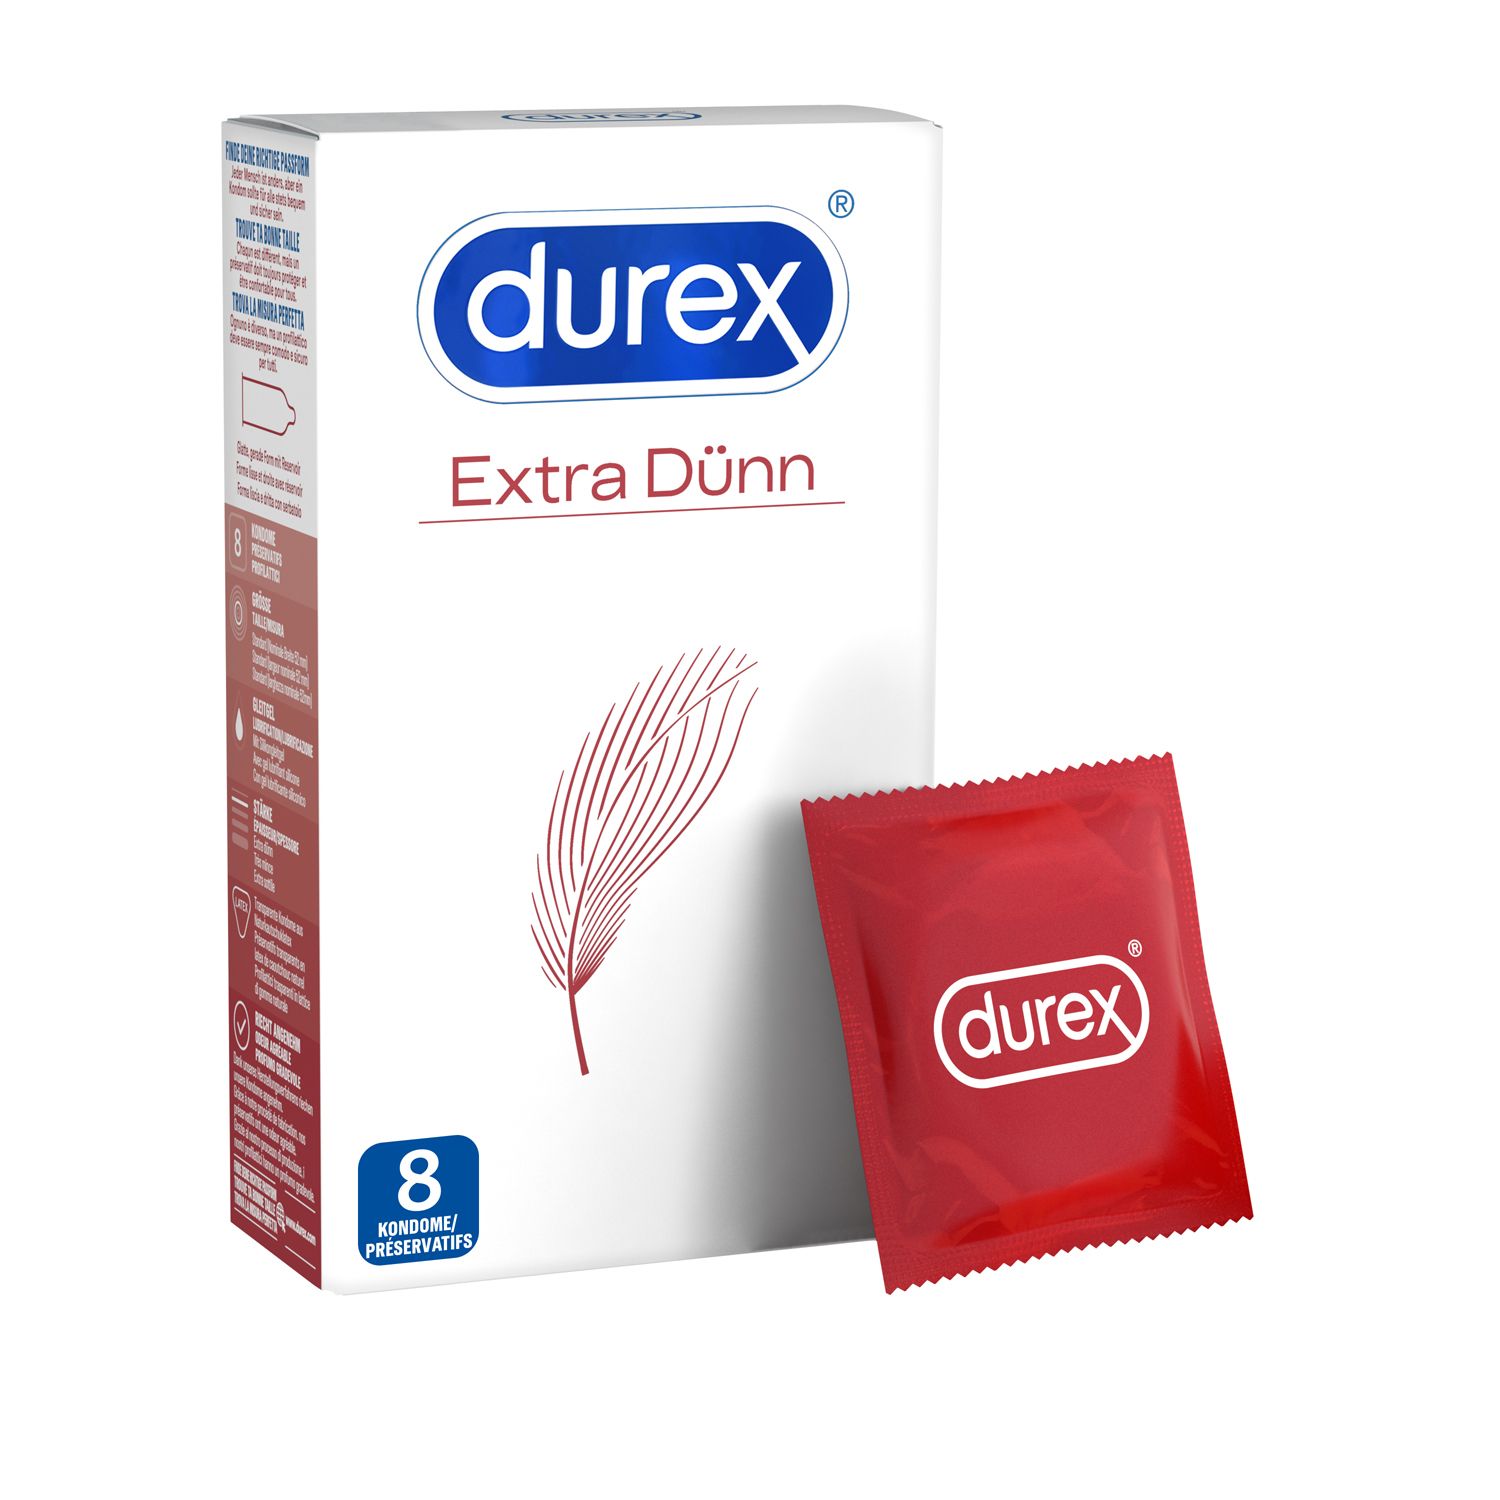 Image of durex® Extra Feucht Kondome